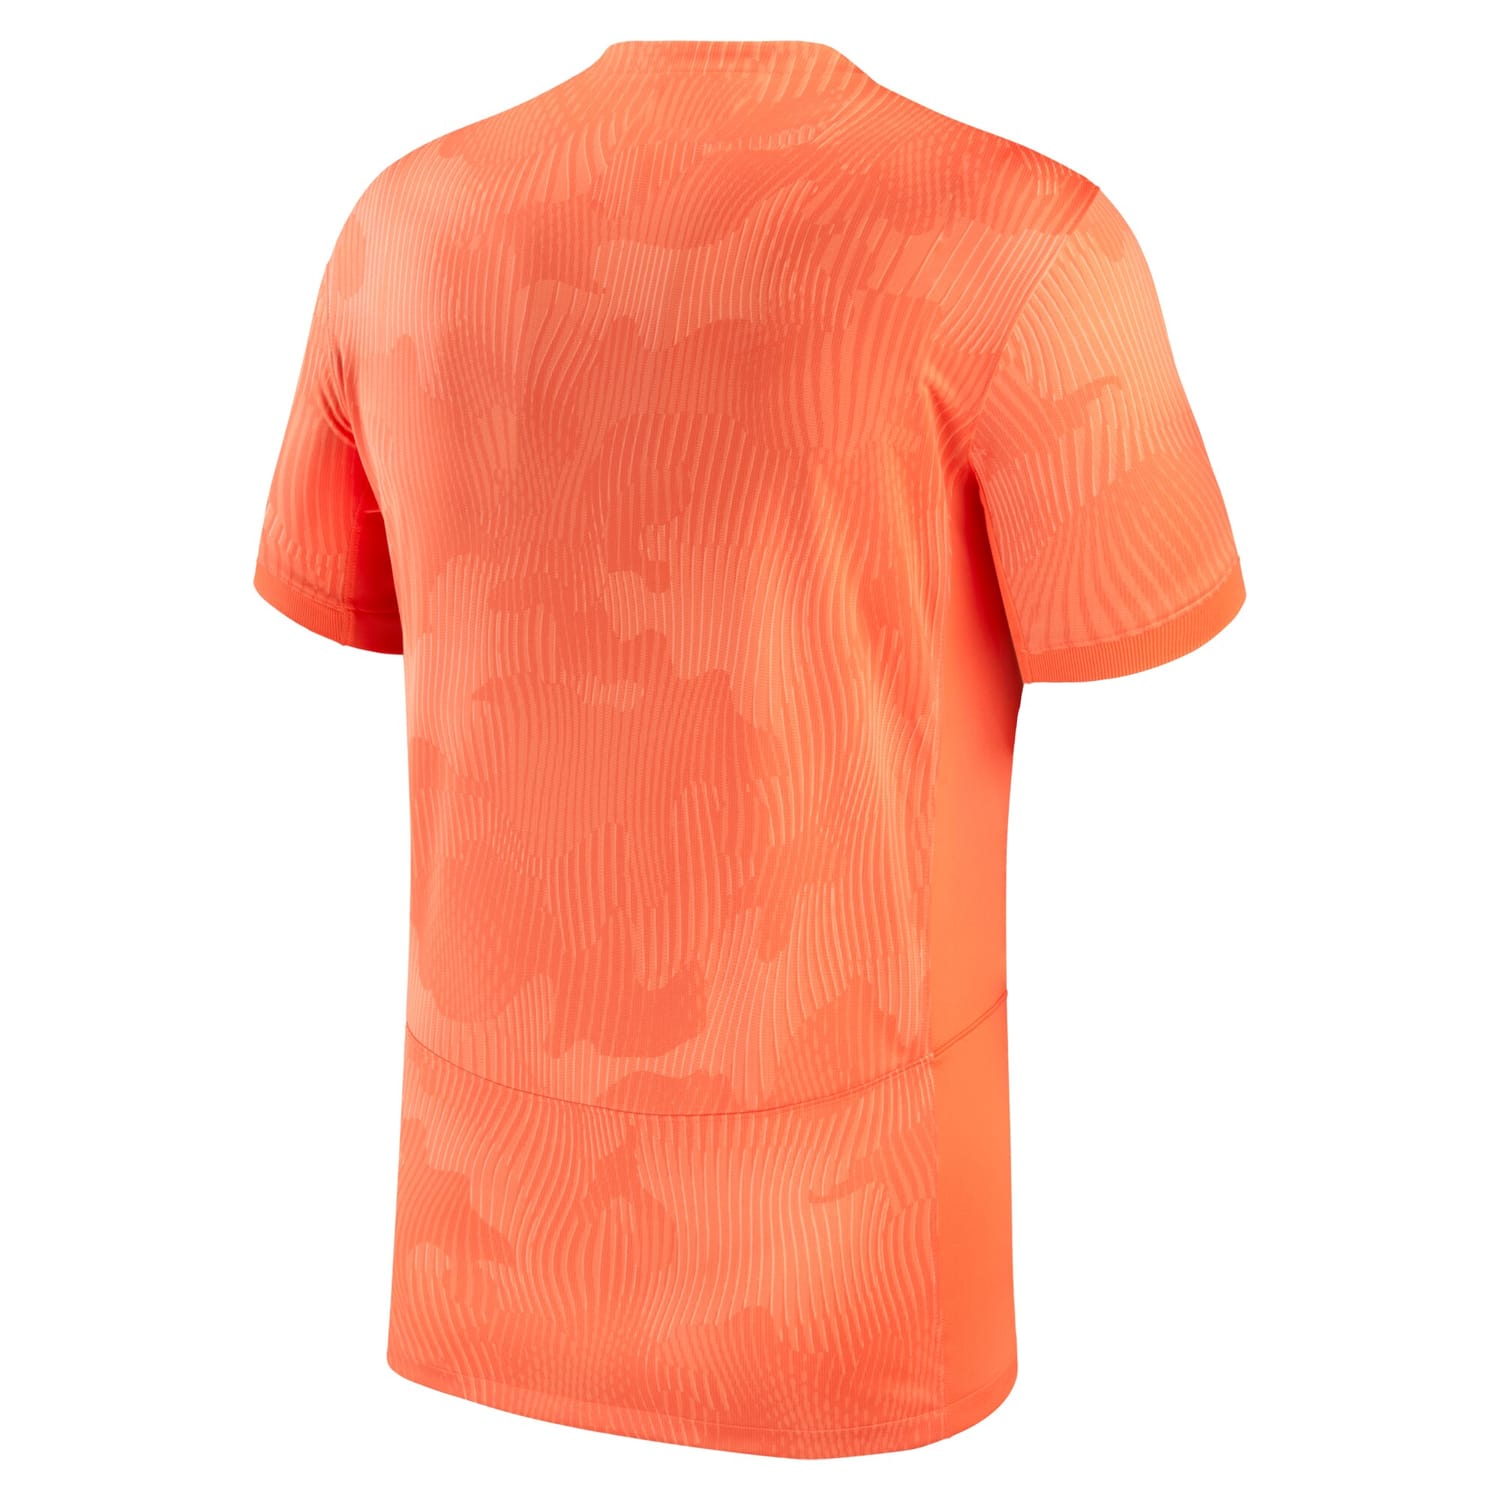 Netherlands Women's National Team Home Jersey Shirt Orange 2023 for Men